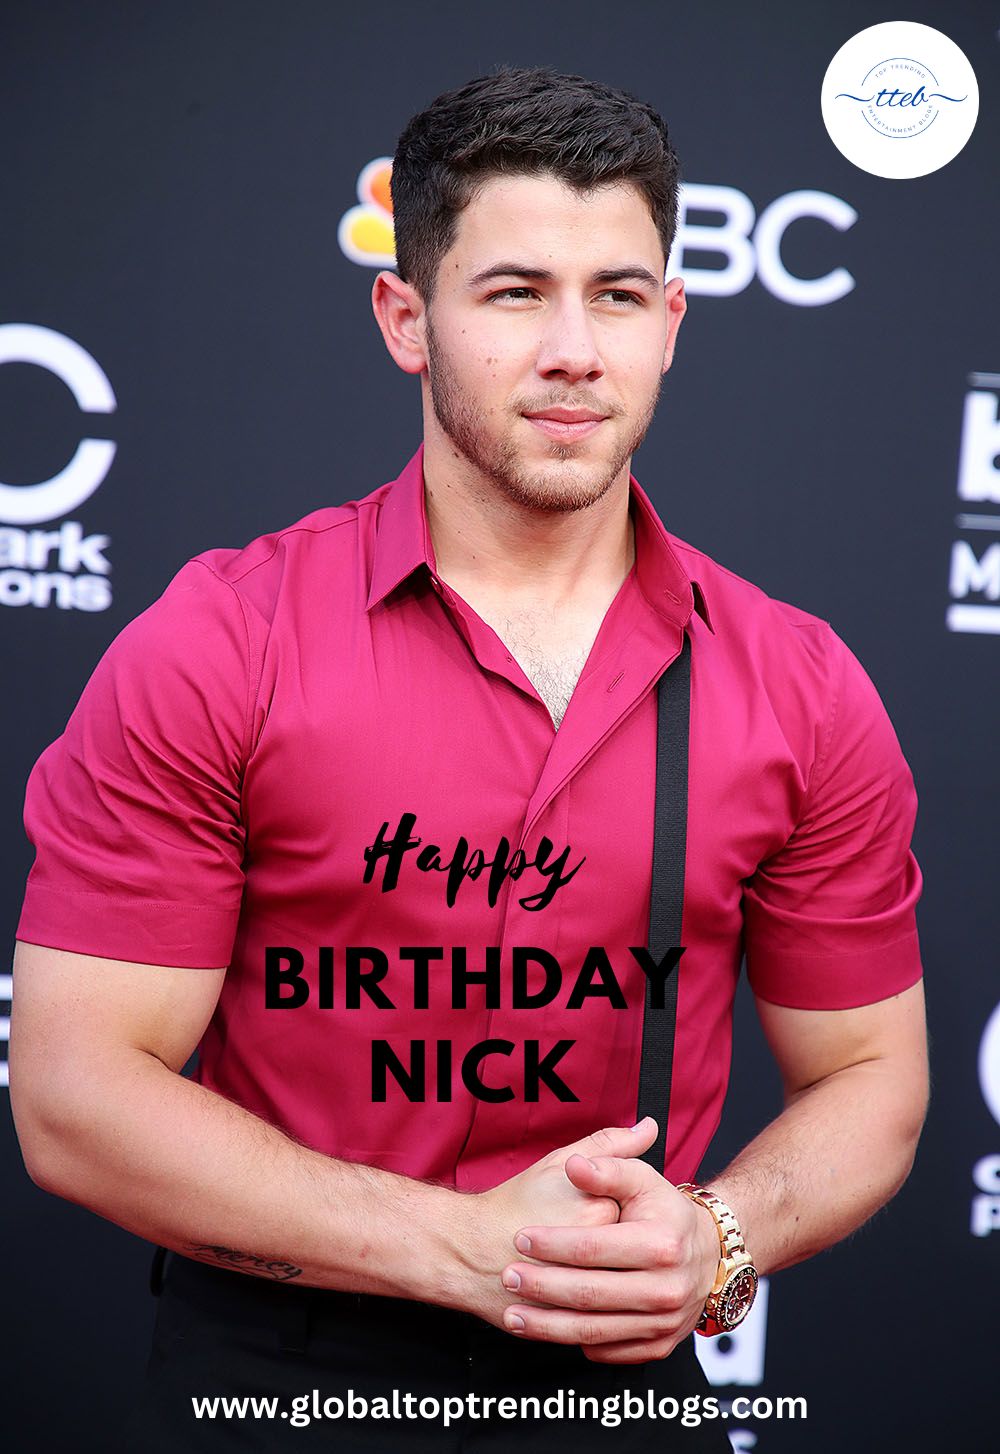 Nick Turns 31